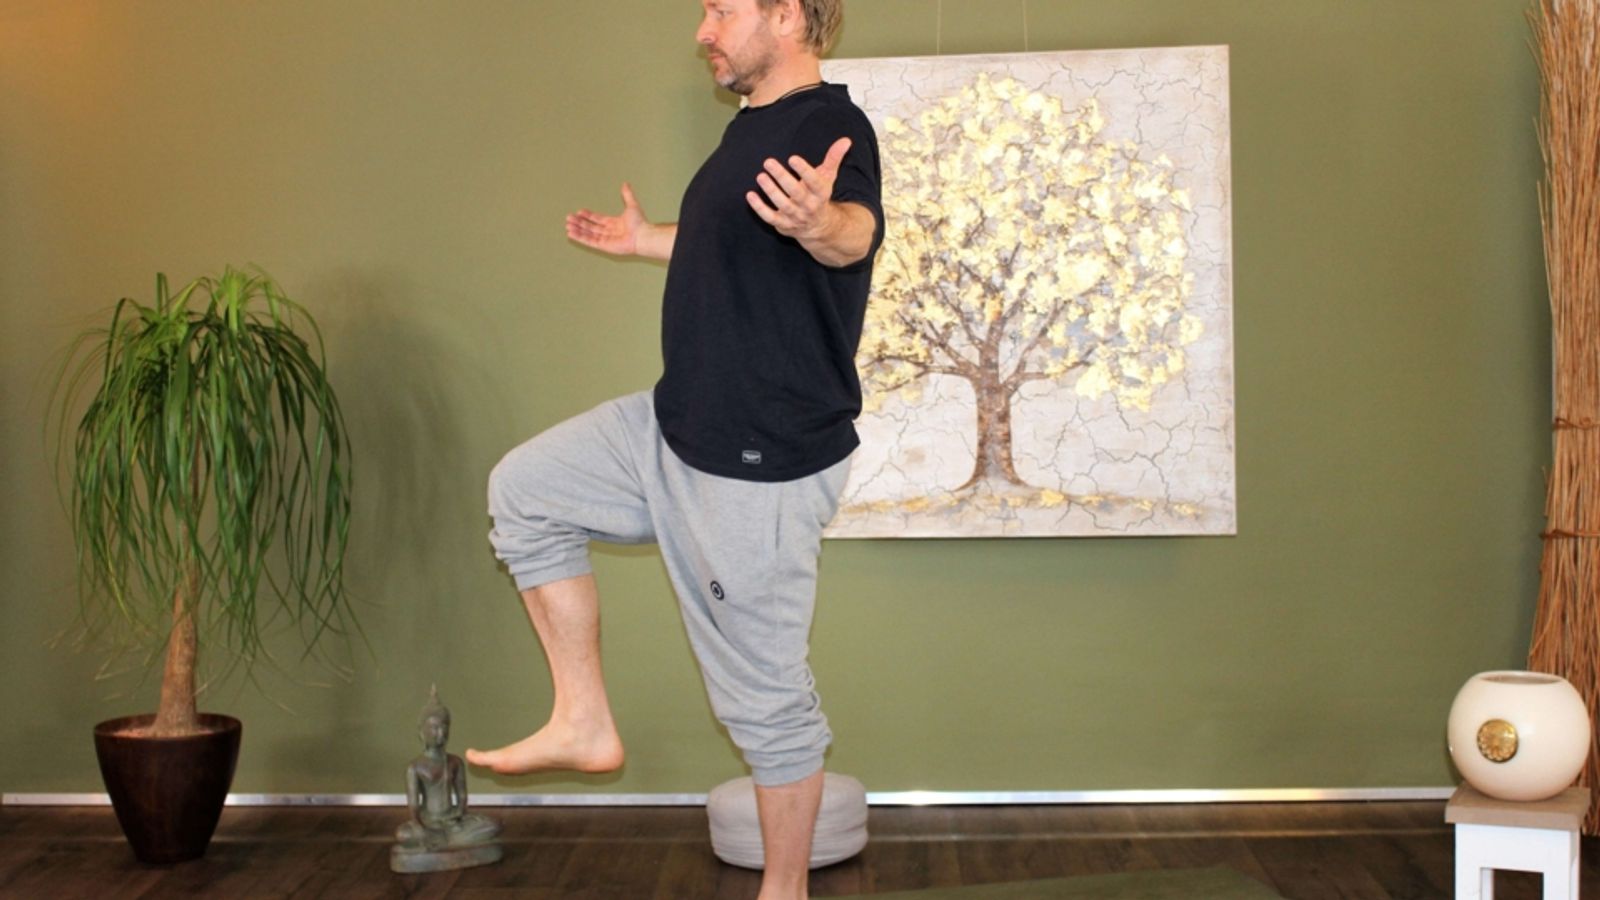 One hour of yoga - Internal stability, inner balance